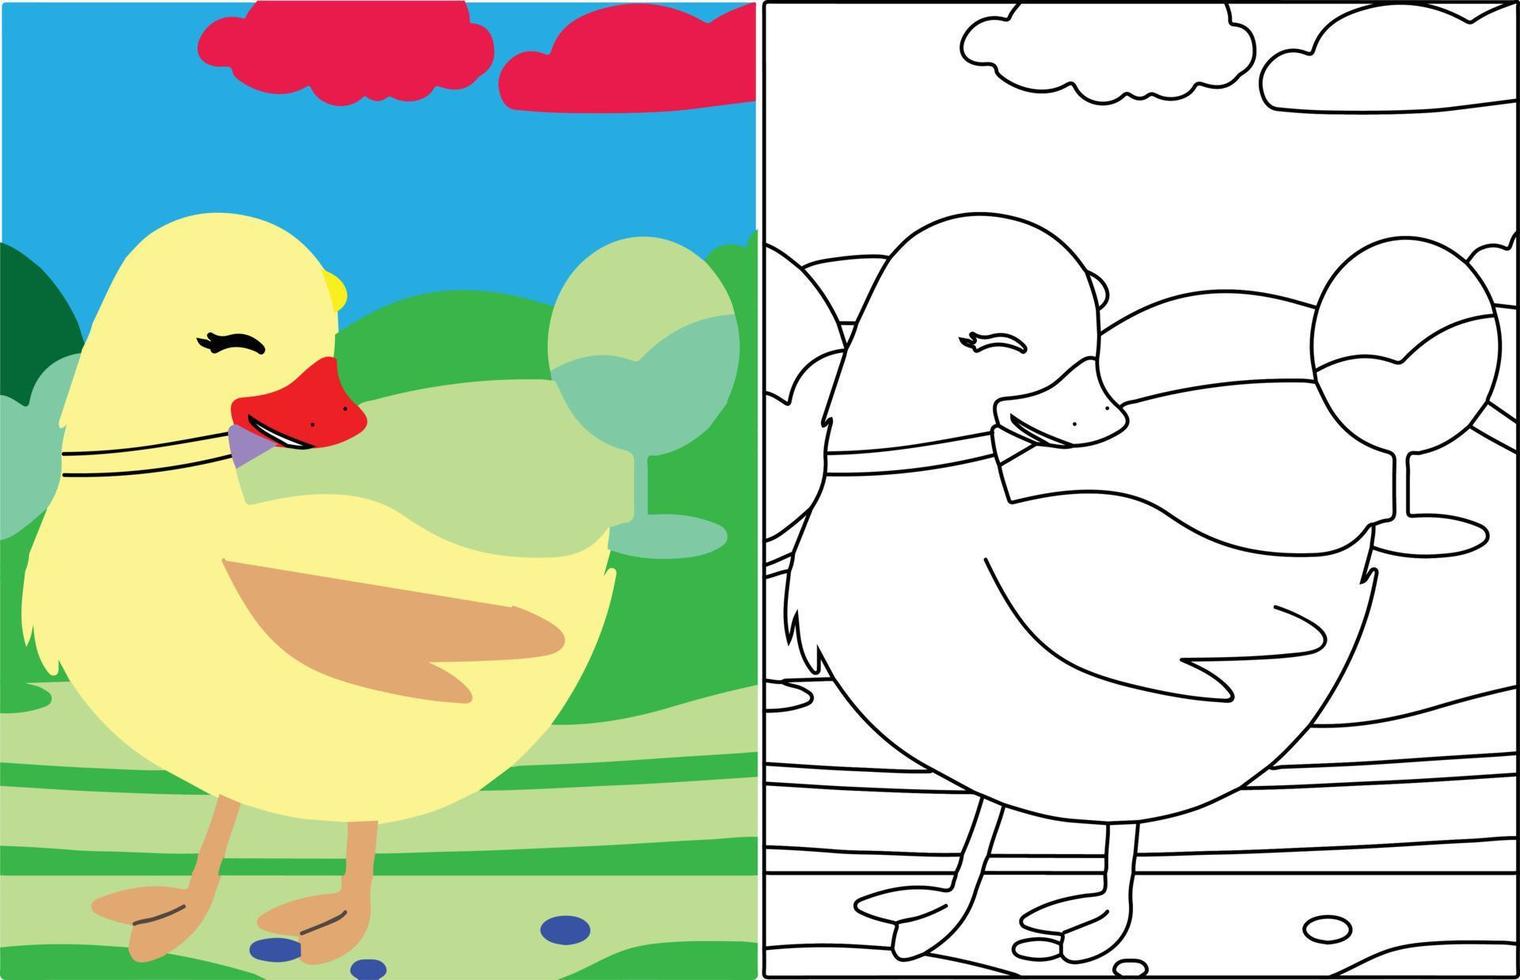 cute farm animal duck coloring page. vector